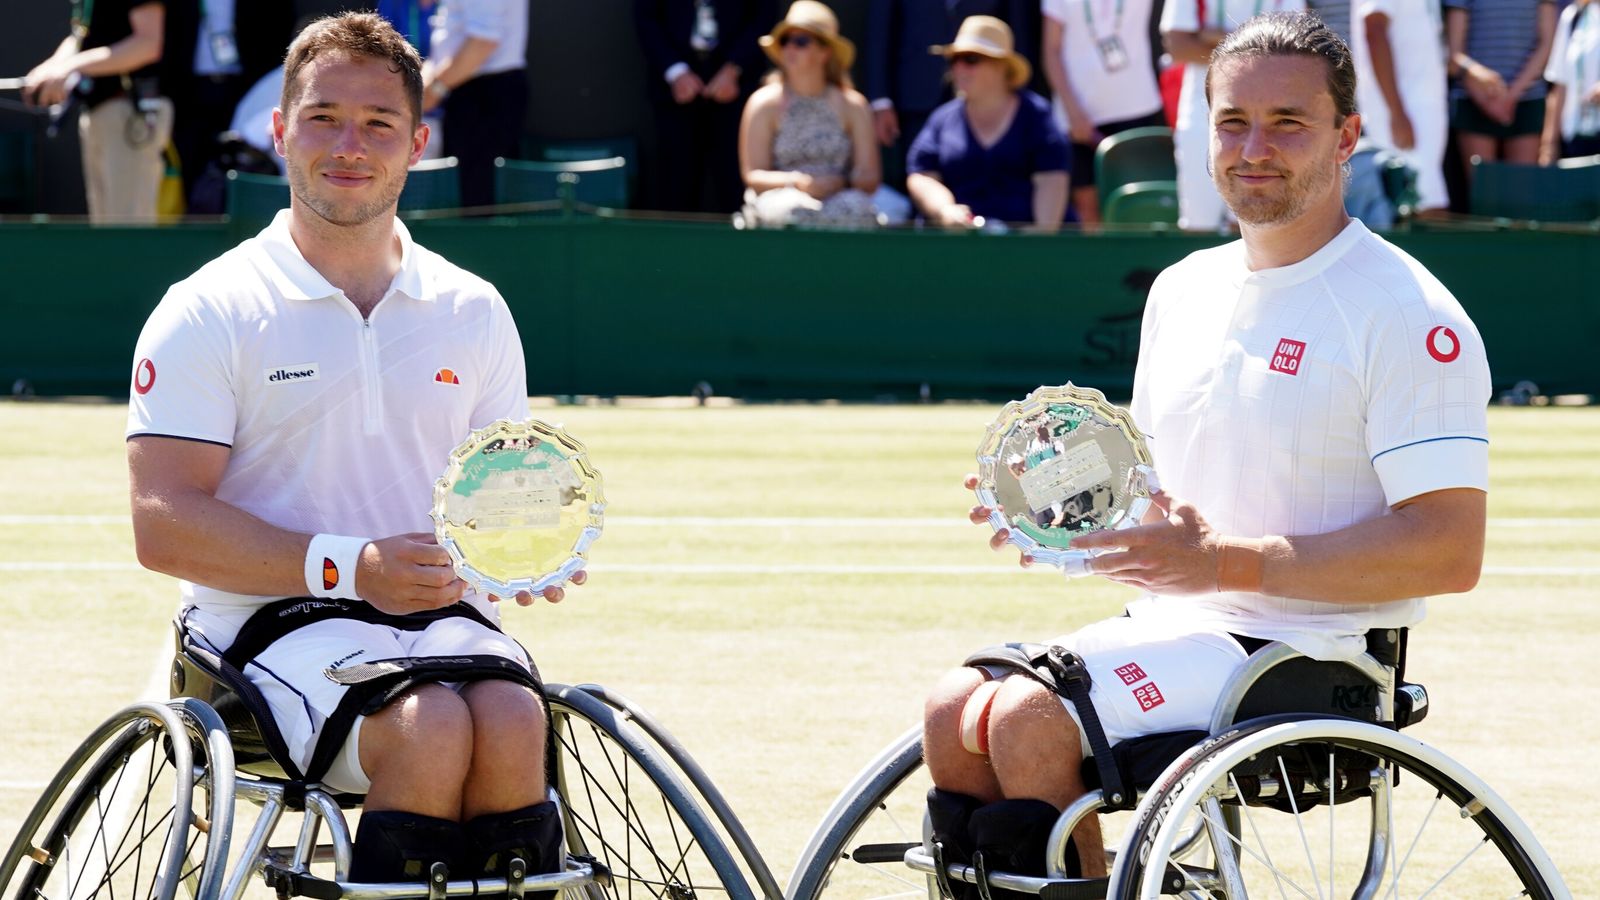 Wimbledon：イギリスのAlfie HewettとGordon Reidは、車椅子ダブルス決勝戦で敗北した後、11連続グランドスラムタイトルを拒否しました。 テニスニュース